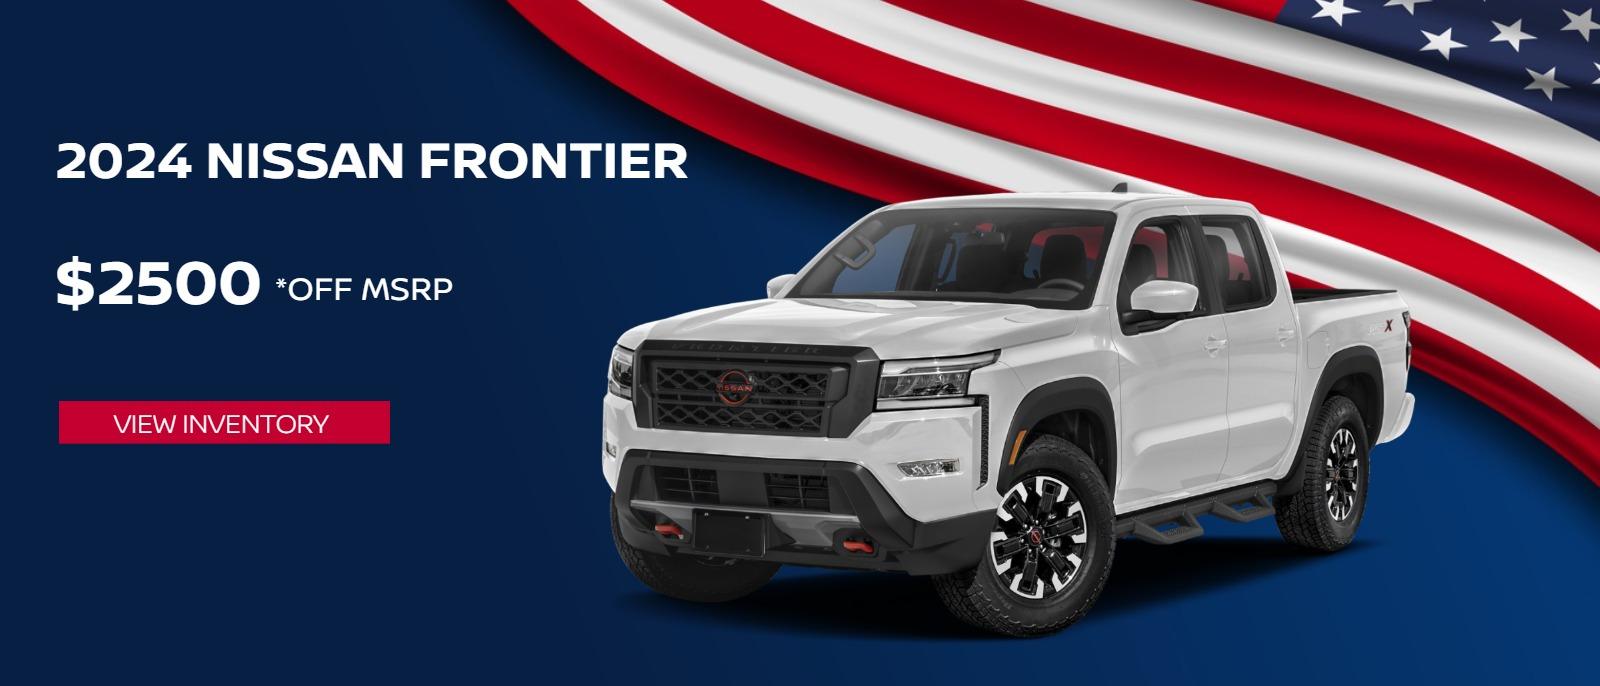 2024 Nissan Frontier | patriotic theme